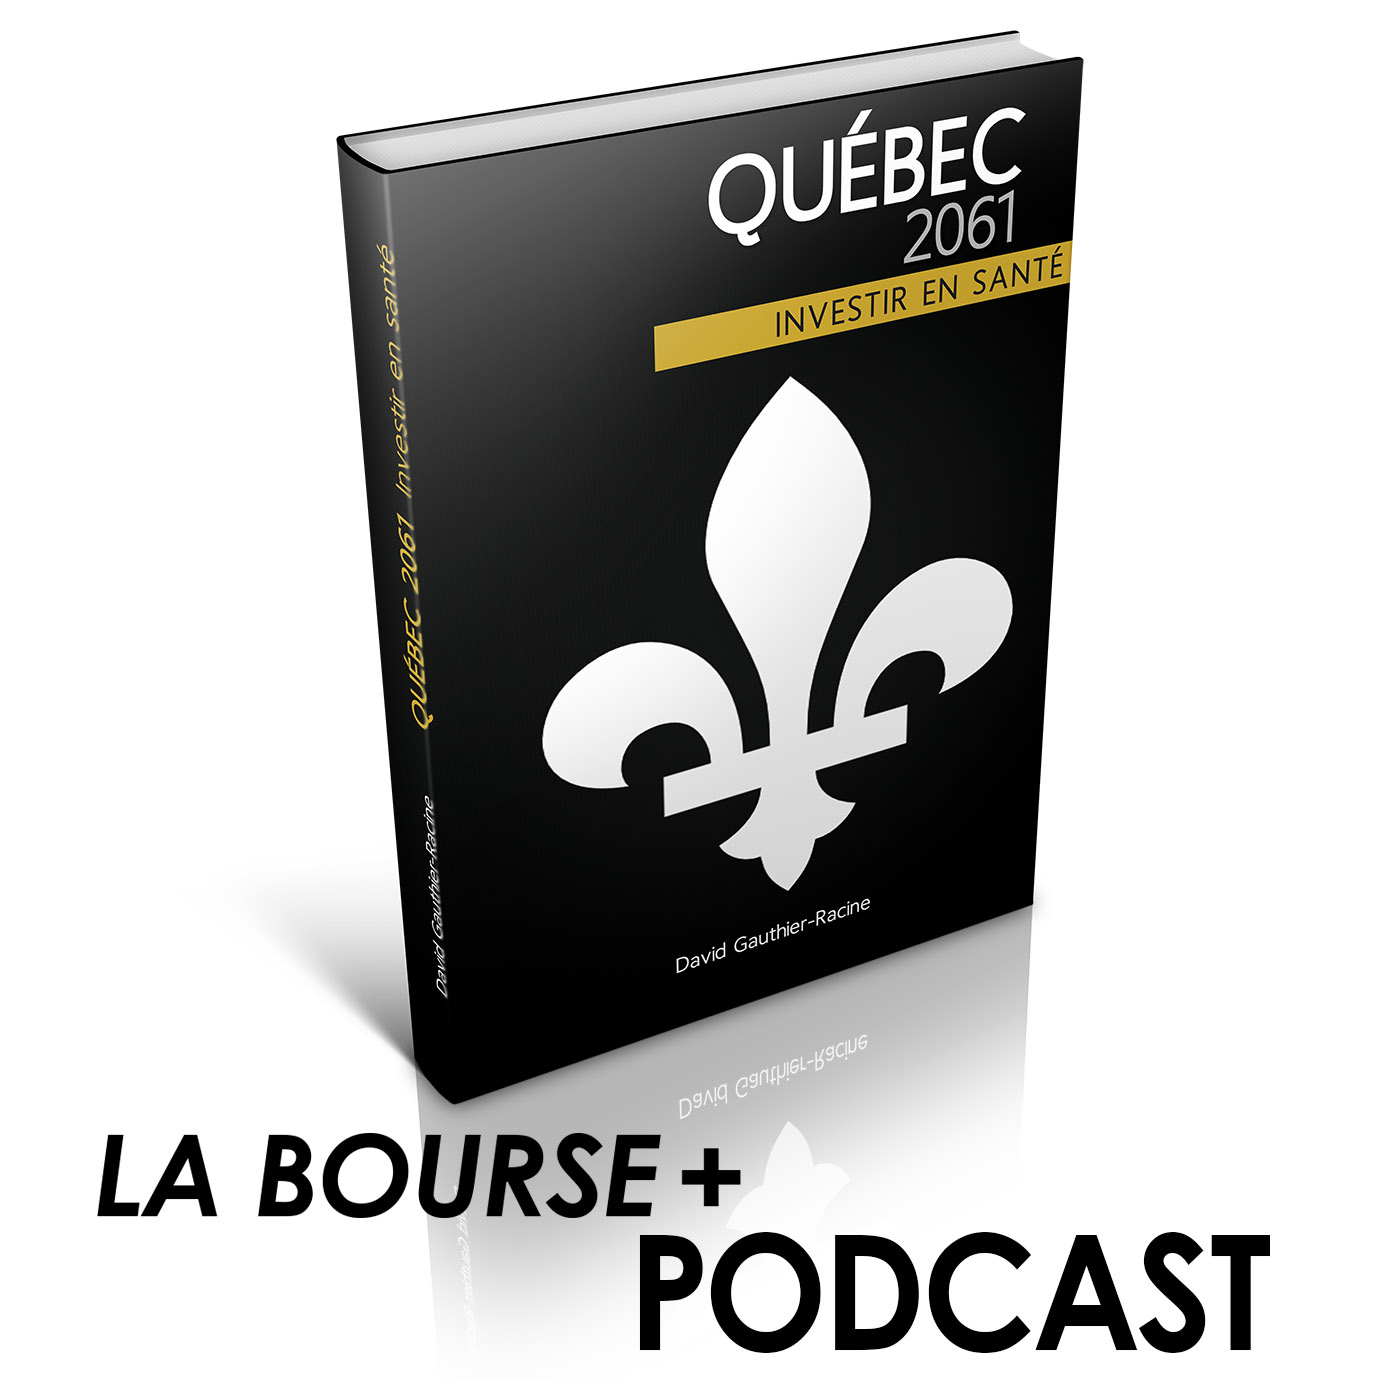 La Bourse+ Podcast